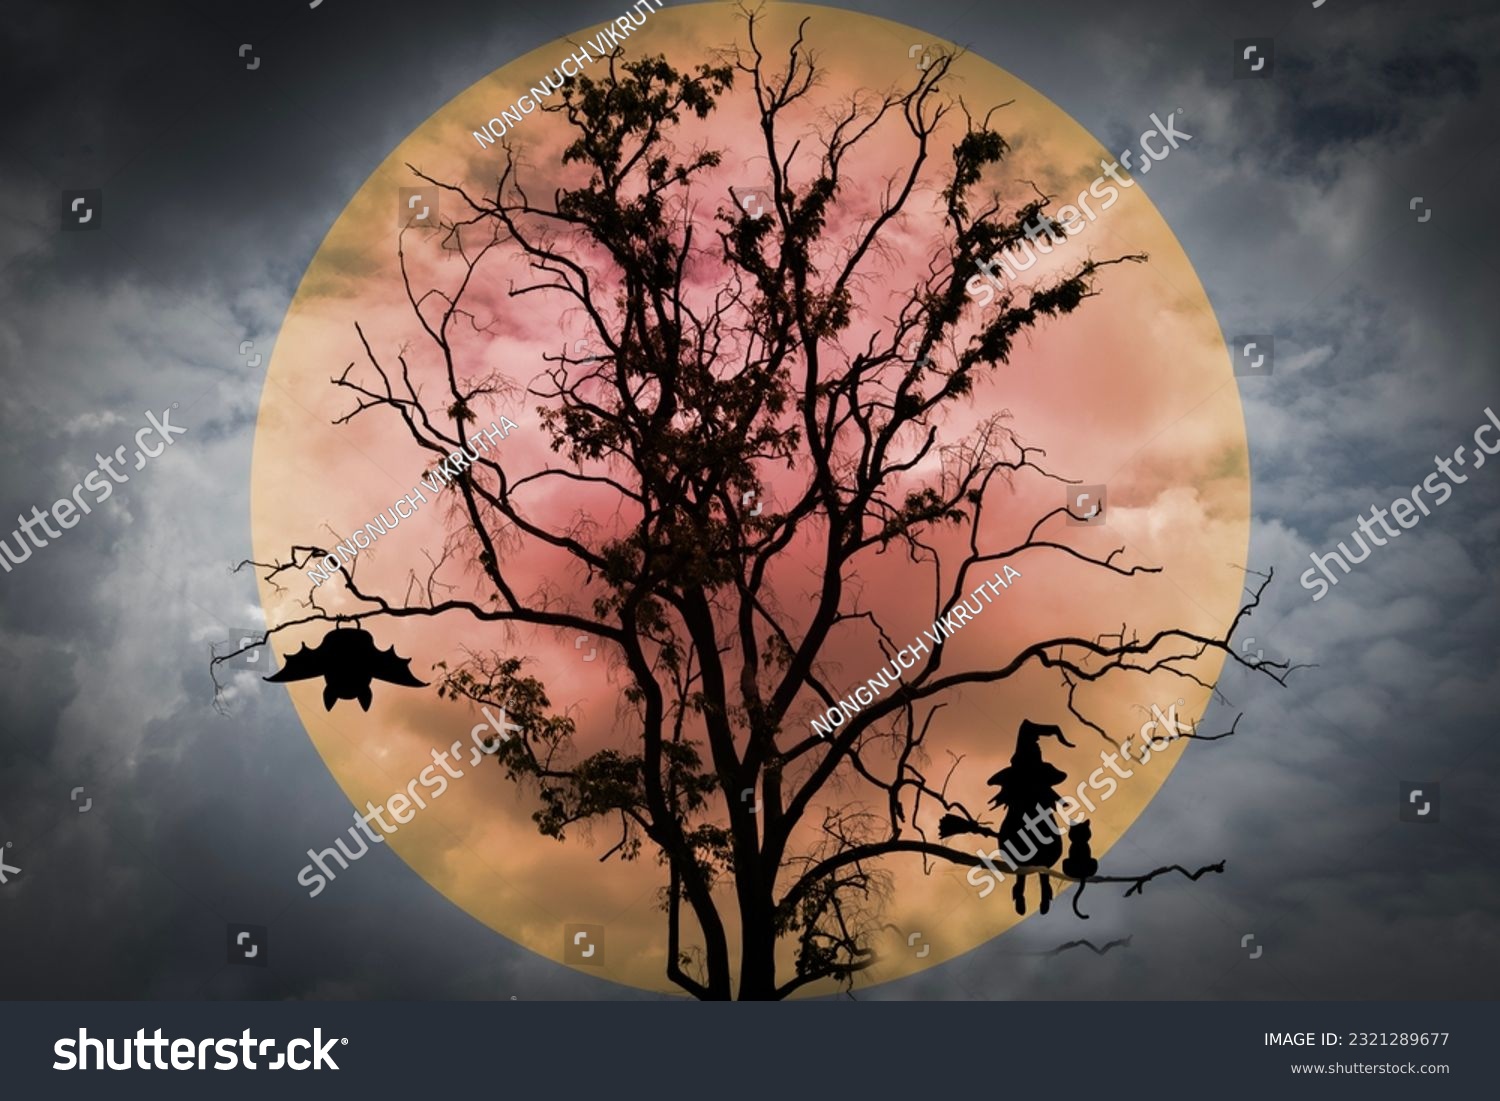 happy halloween, halloween night background, Halloween Background, holloween party. Happy halloween card template design. moon, tree, bat. #2321289677